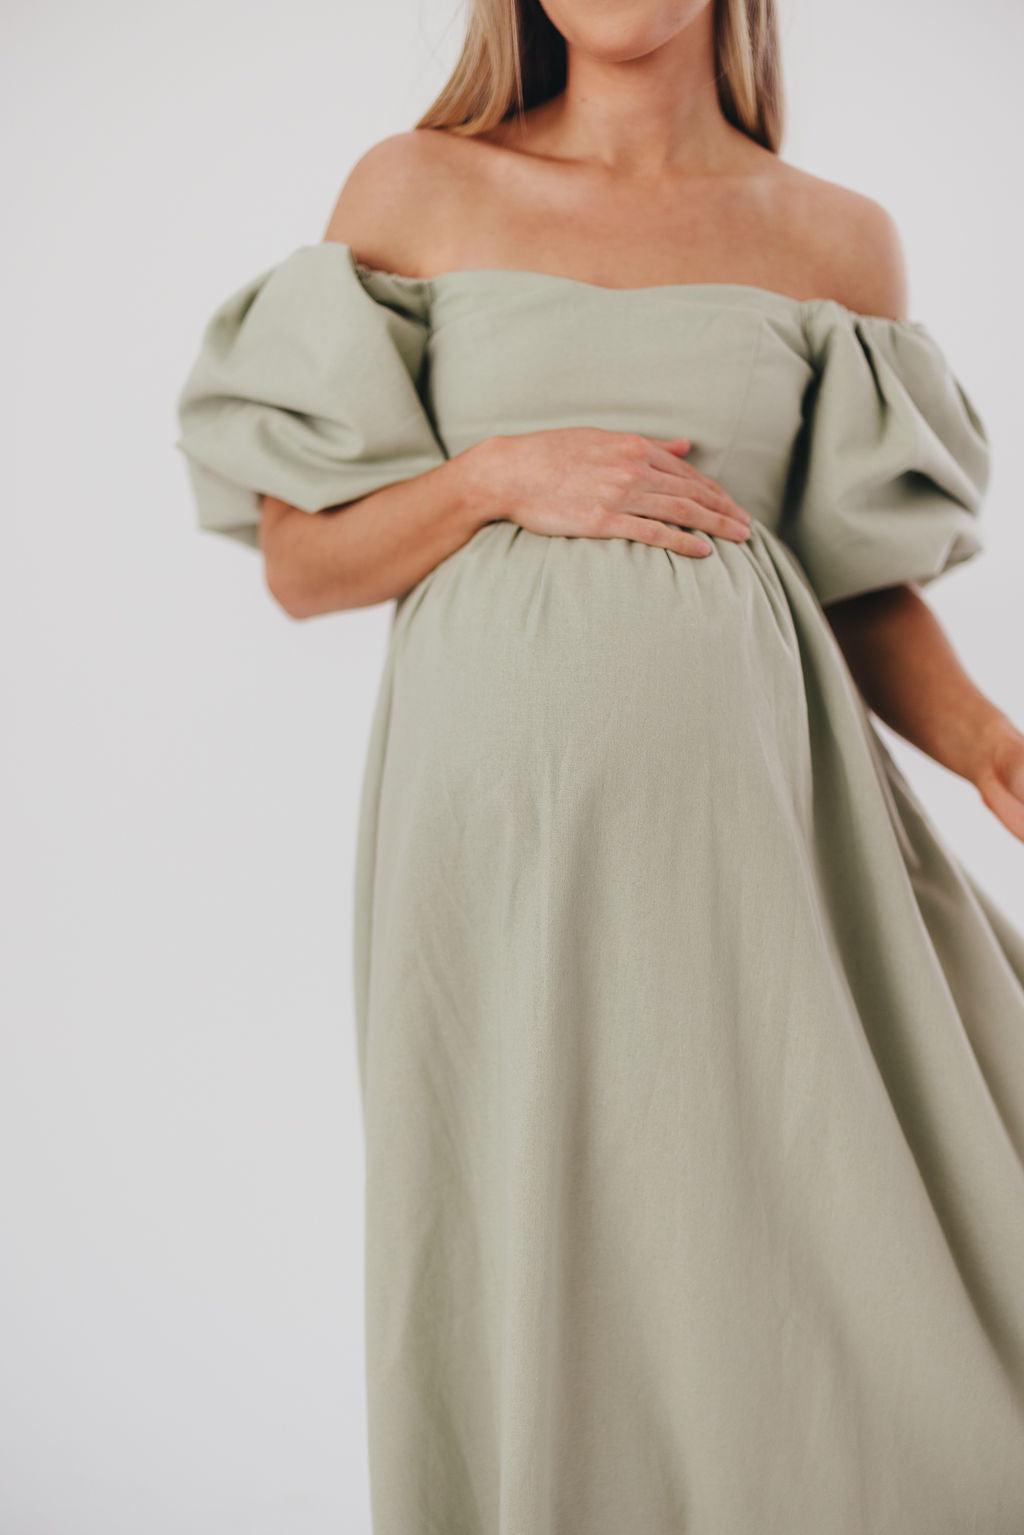 Hamilton Midi Dress in Olive - Bump Friendly (S-XL)